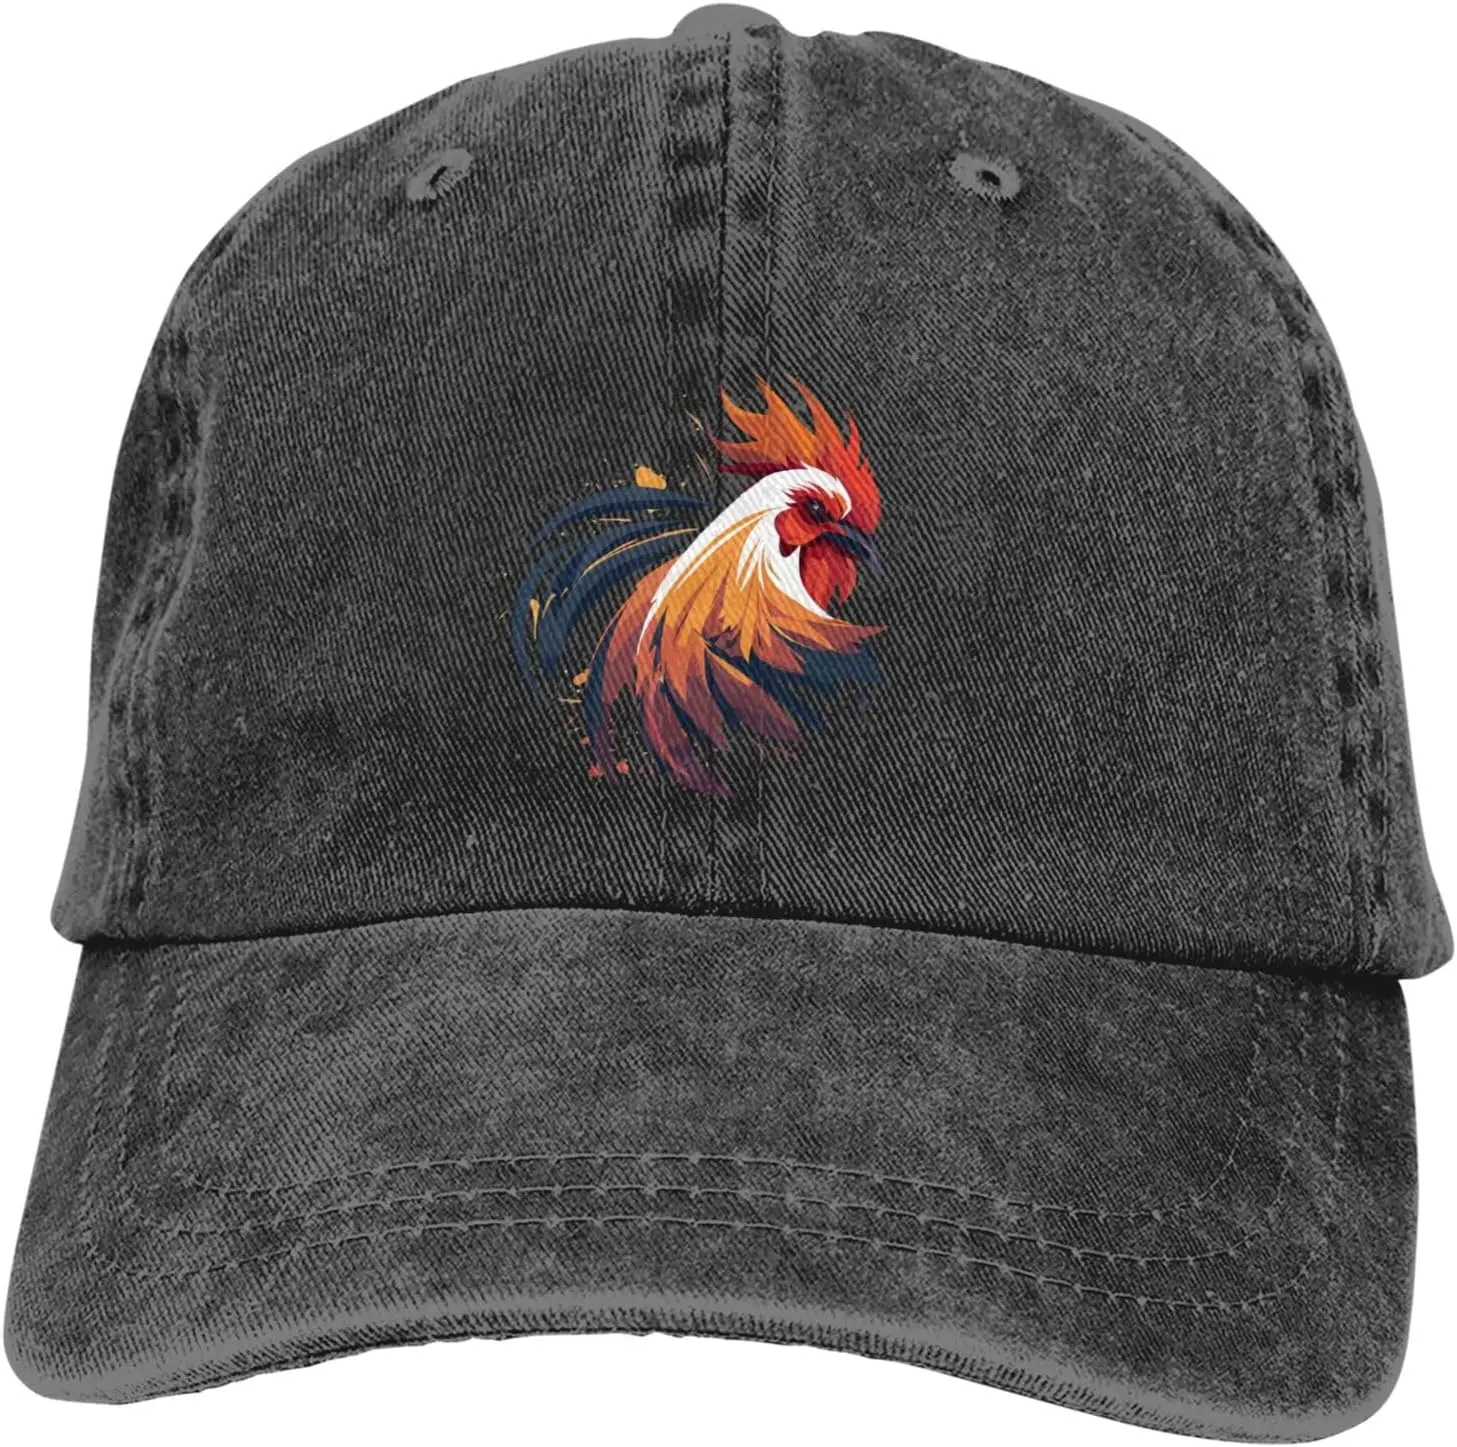 

Rooster Chicken Head Distressed Adjustable Washed Denim Mens Dad Trucker Hat Baseball Ball Cap for Men